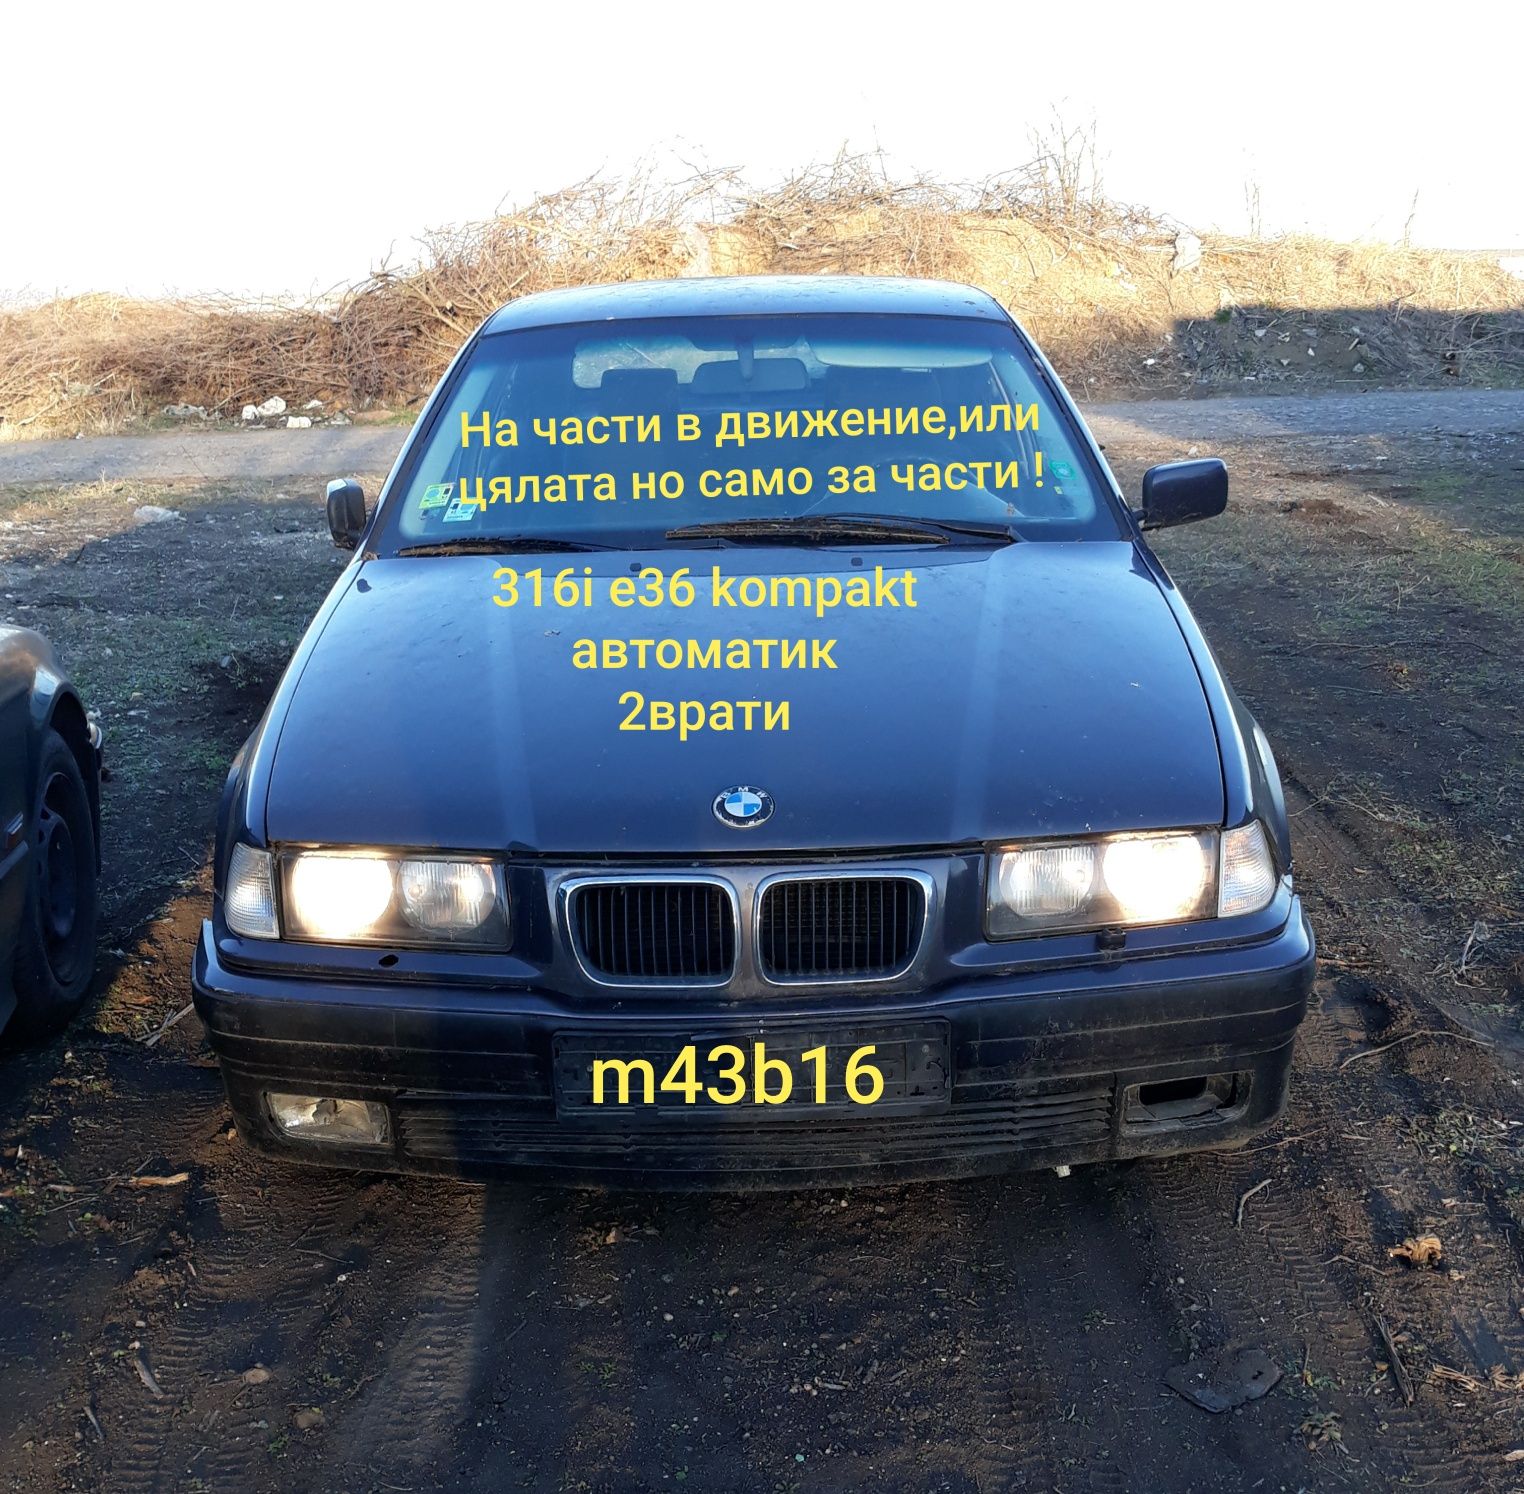 BMW 316i kompakt e36  на част